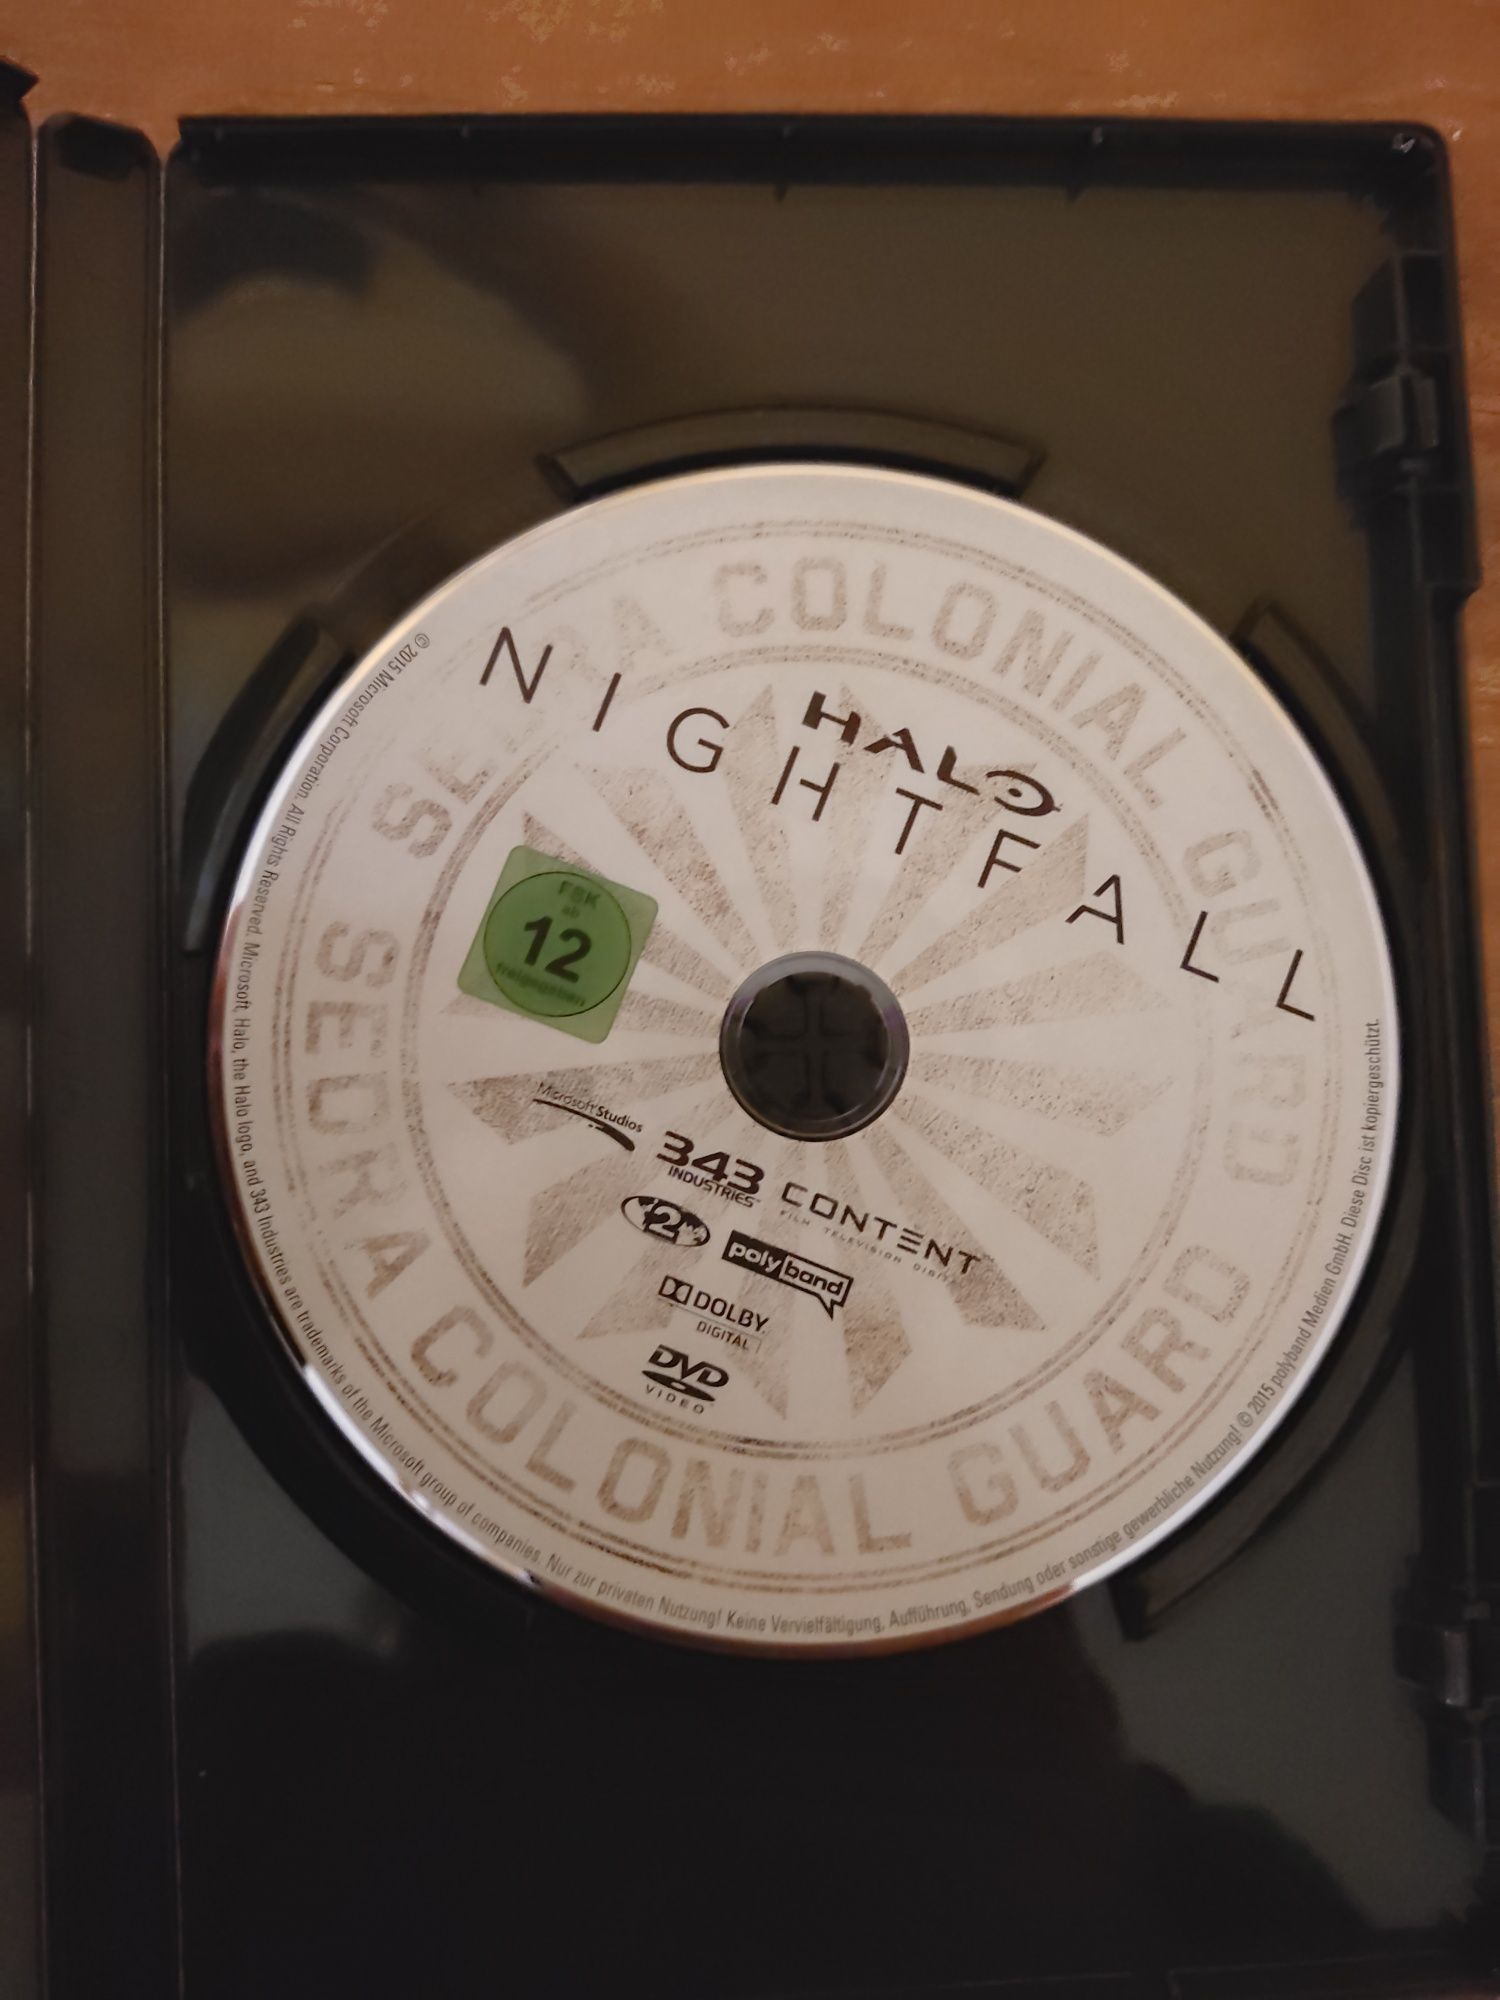 Halo nightfall dvd